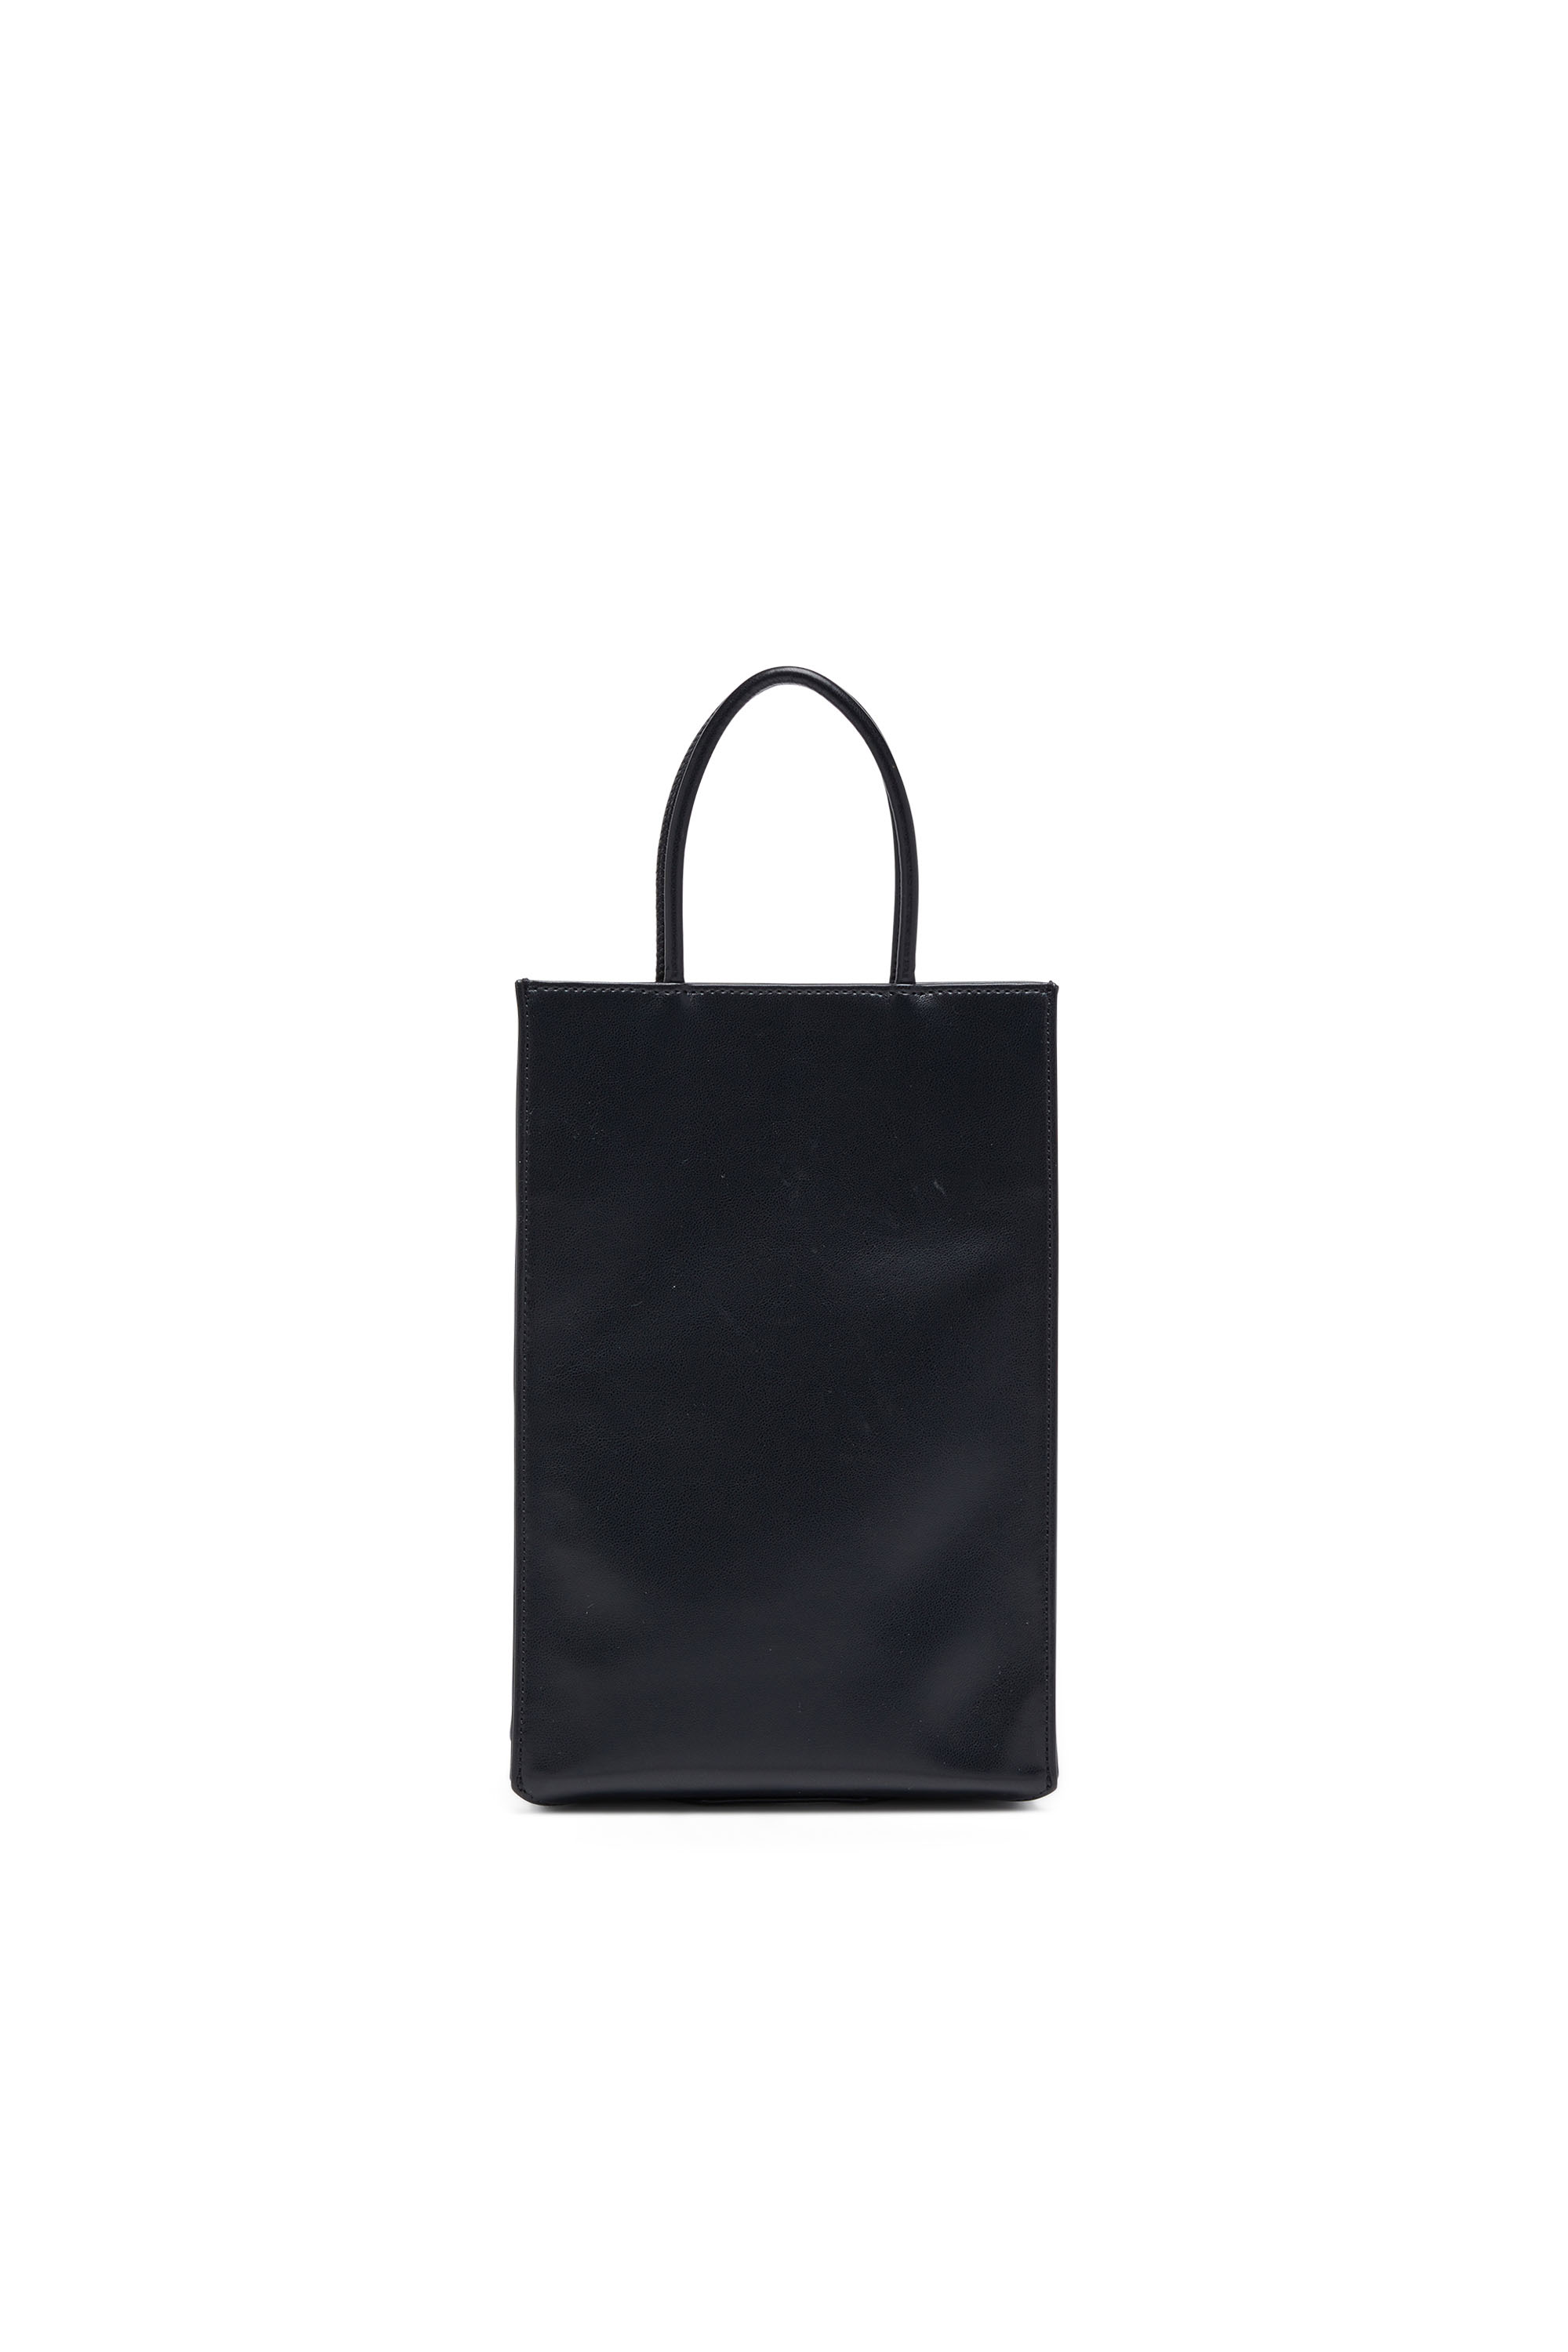 Diesel - DSL 3D SHOPPER M X, Unisex Dsl 3D M-PU tote bag with embossed logo in Black - Image 2